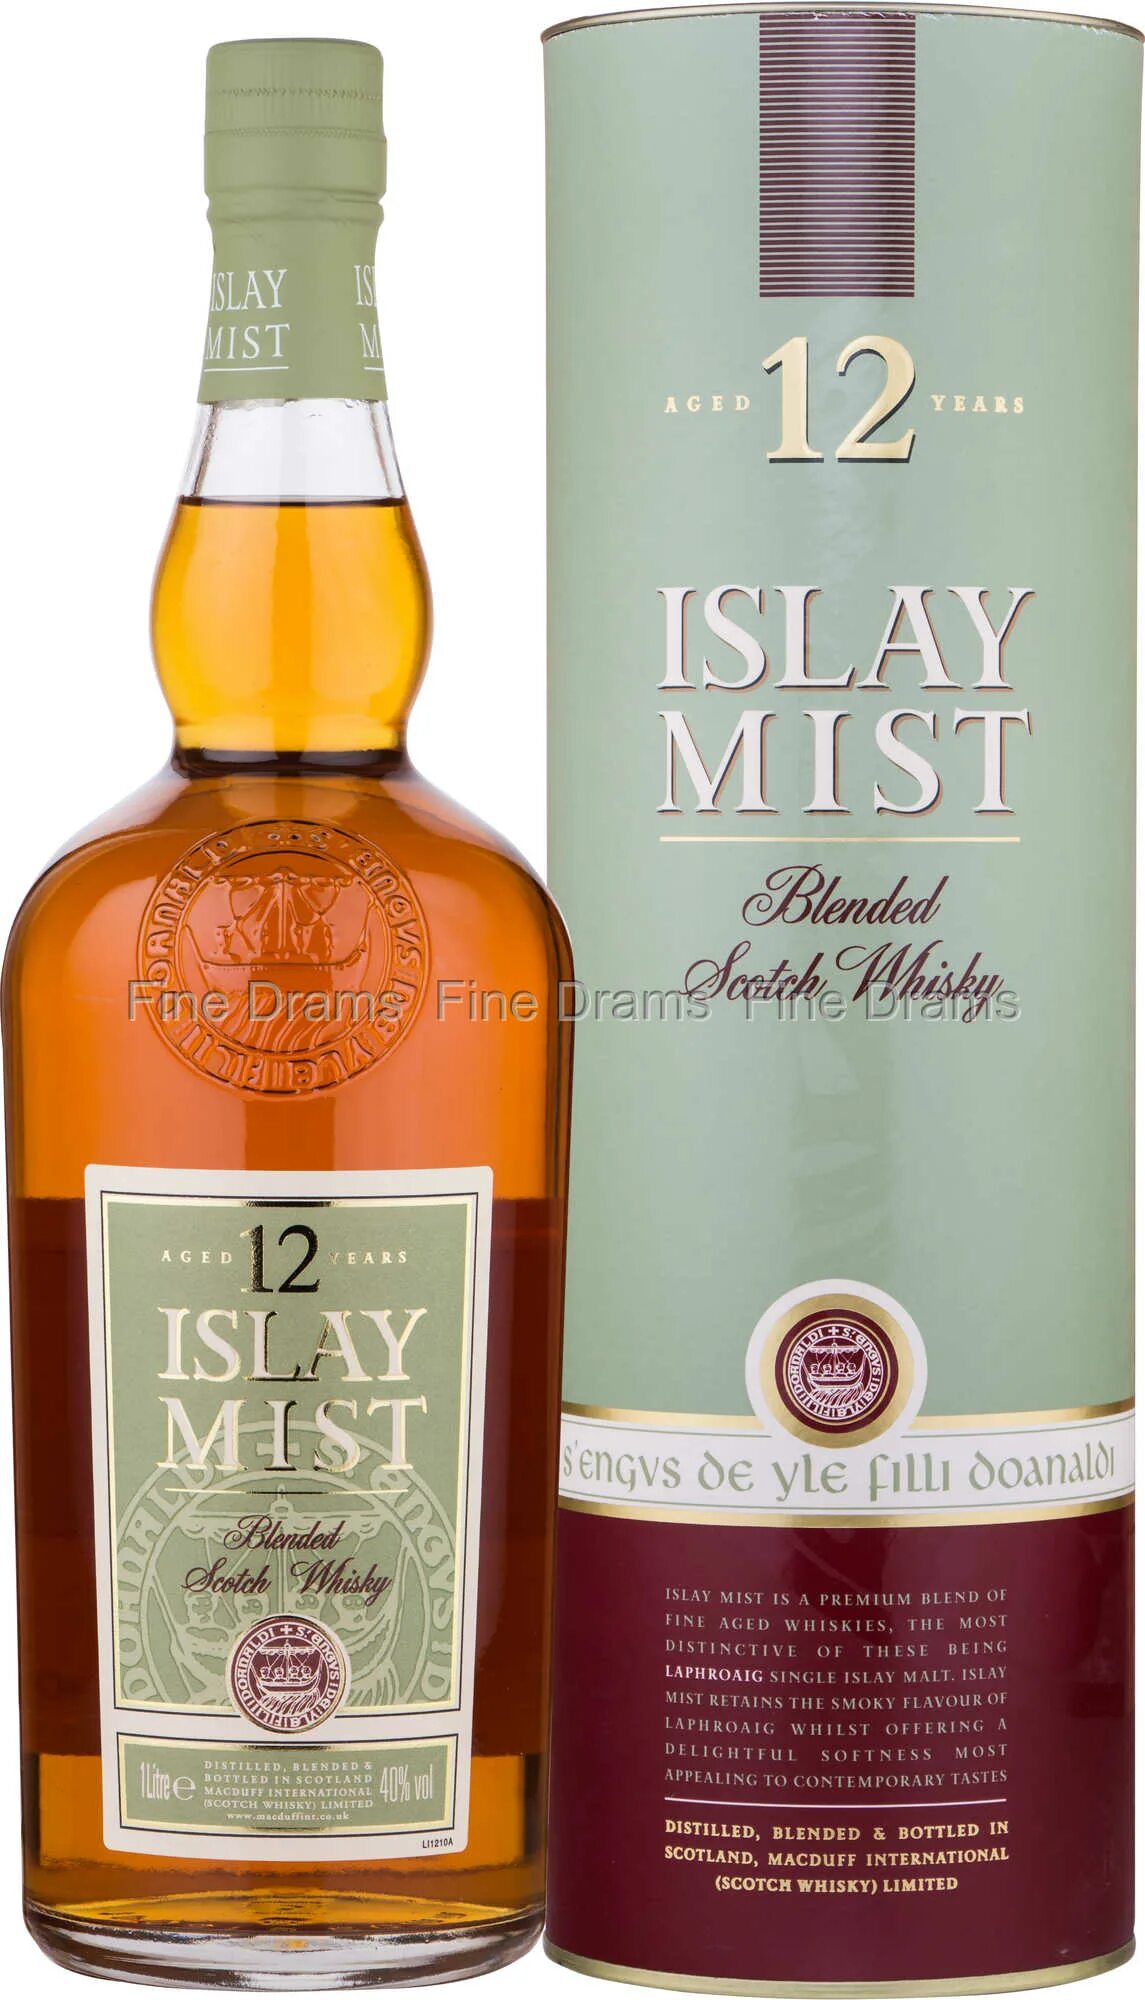 Mist 0.7. Ислай мист виски. Айла мист виски. Виски Islay Mist 0.7. Blended Scotch Whisky "Islay Mist".